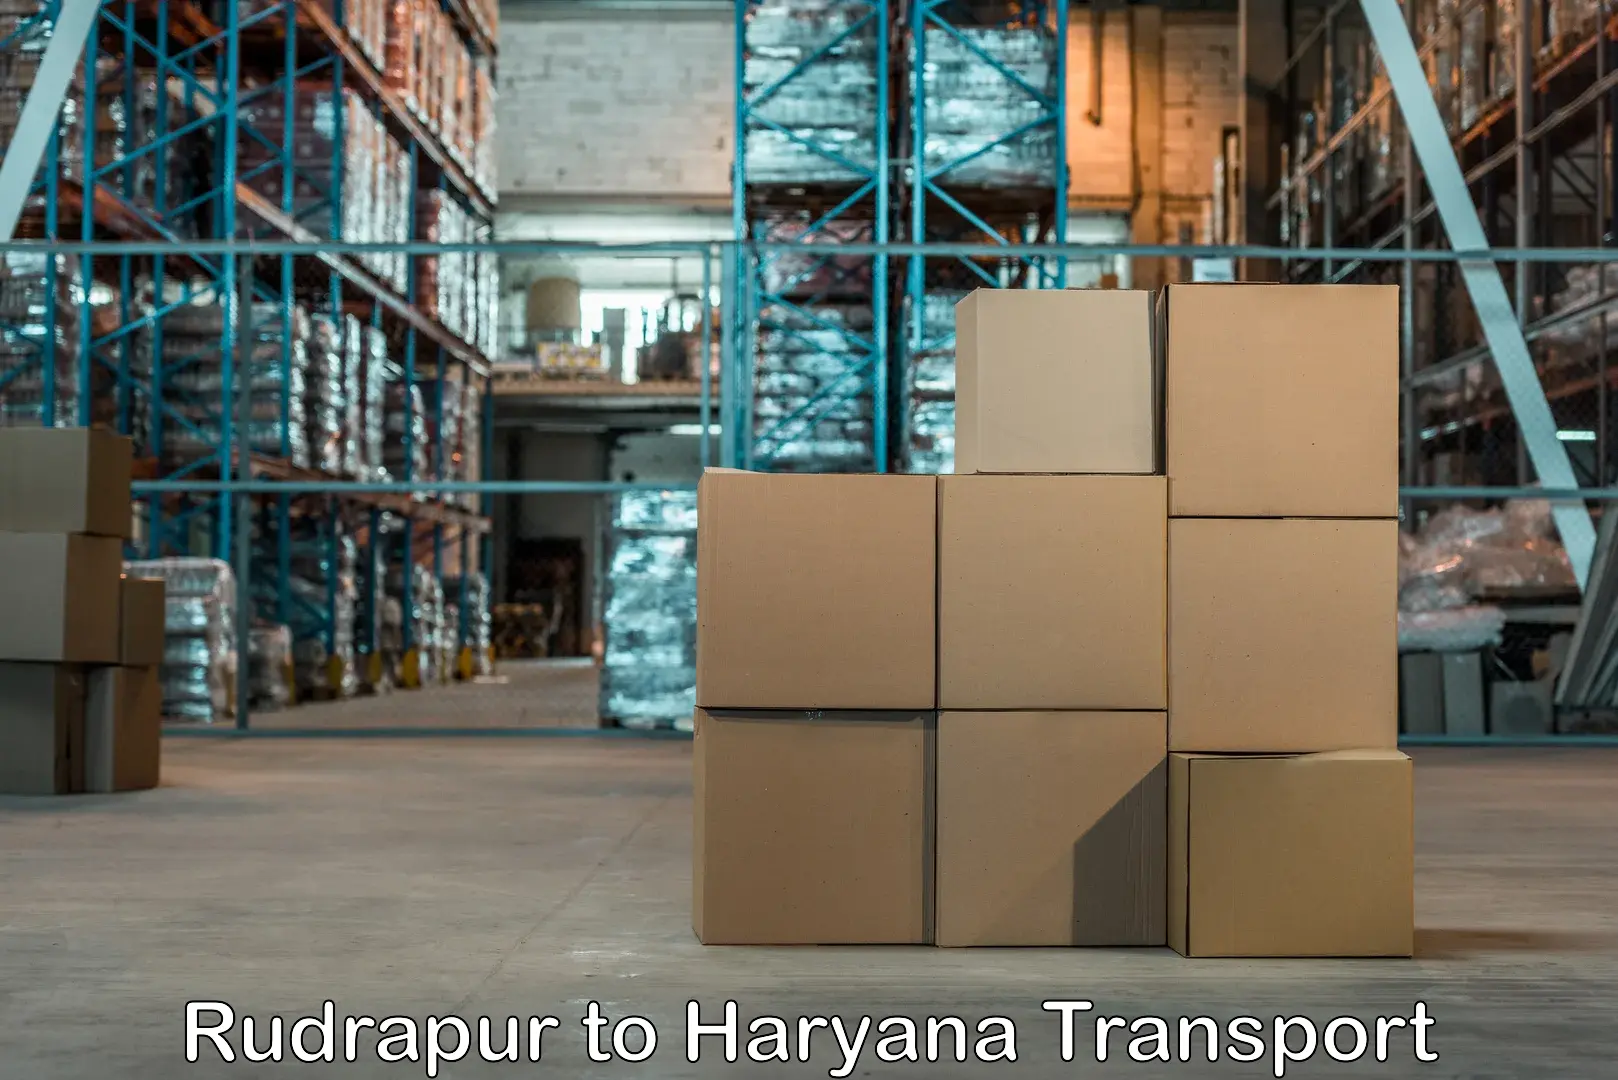 Transport in sharing Rudrapur to Faridabad